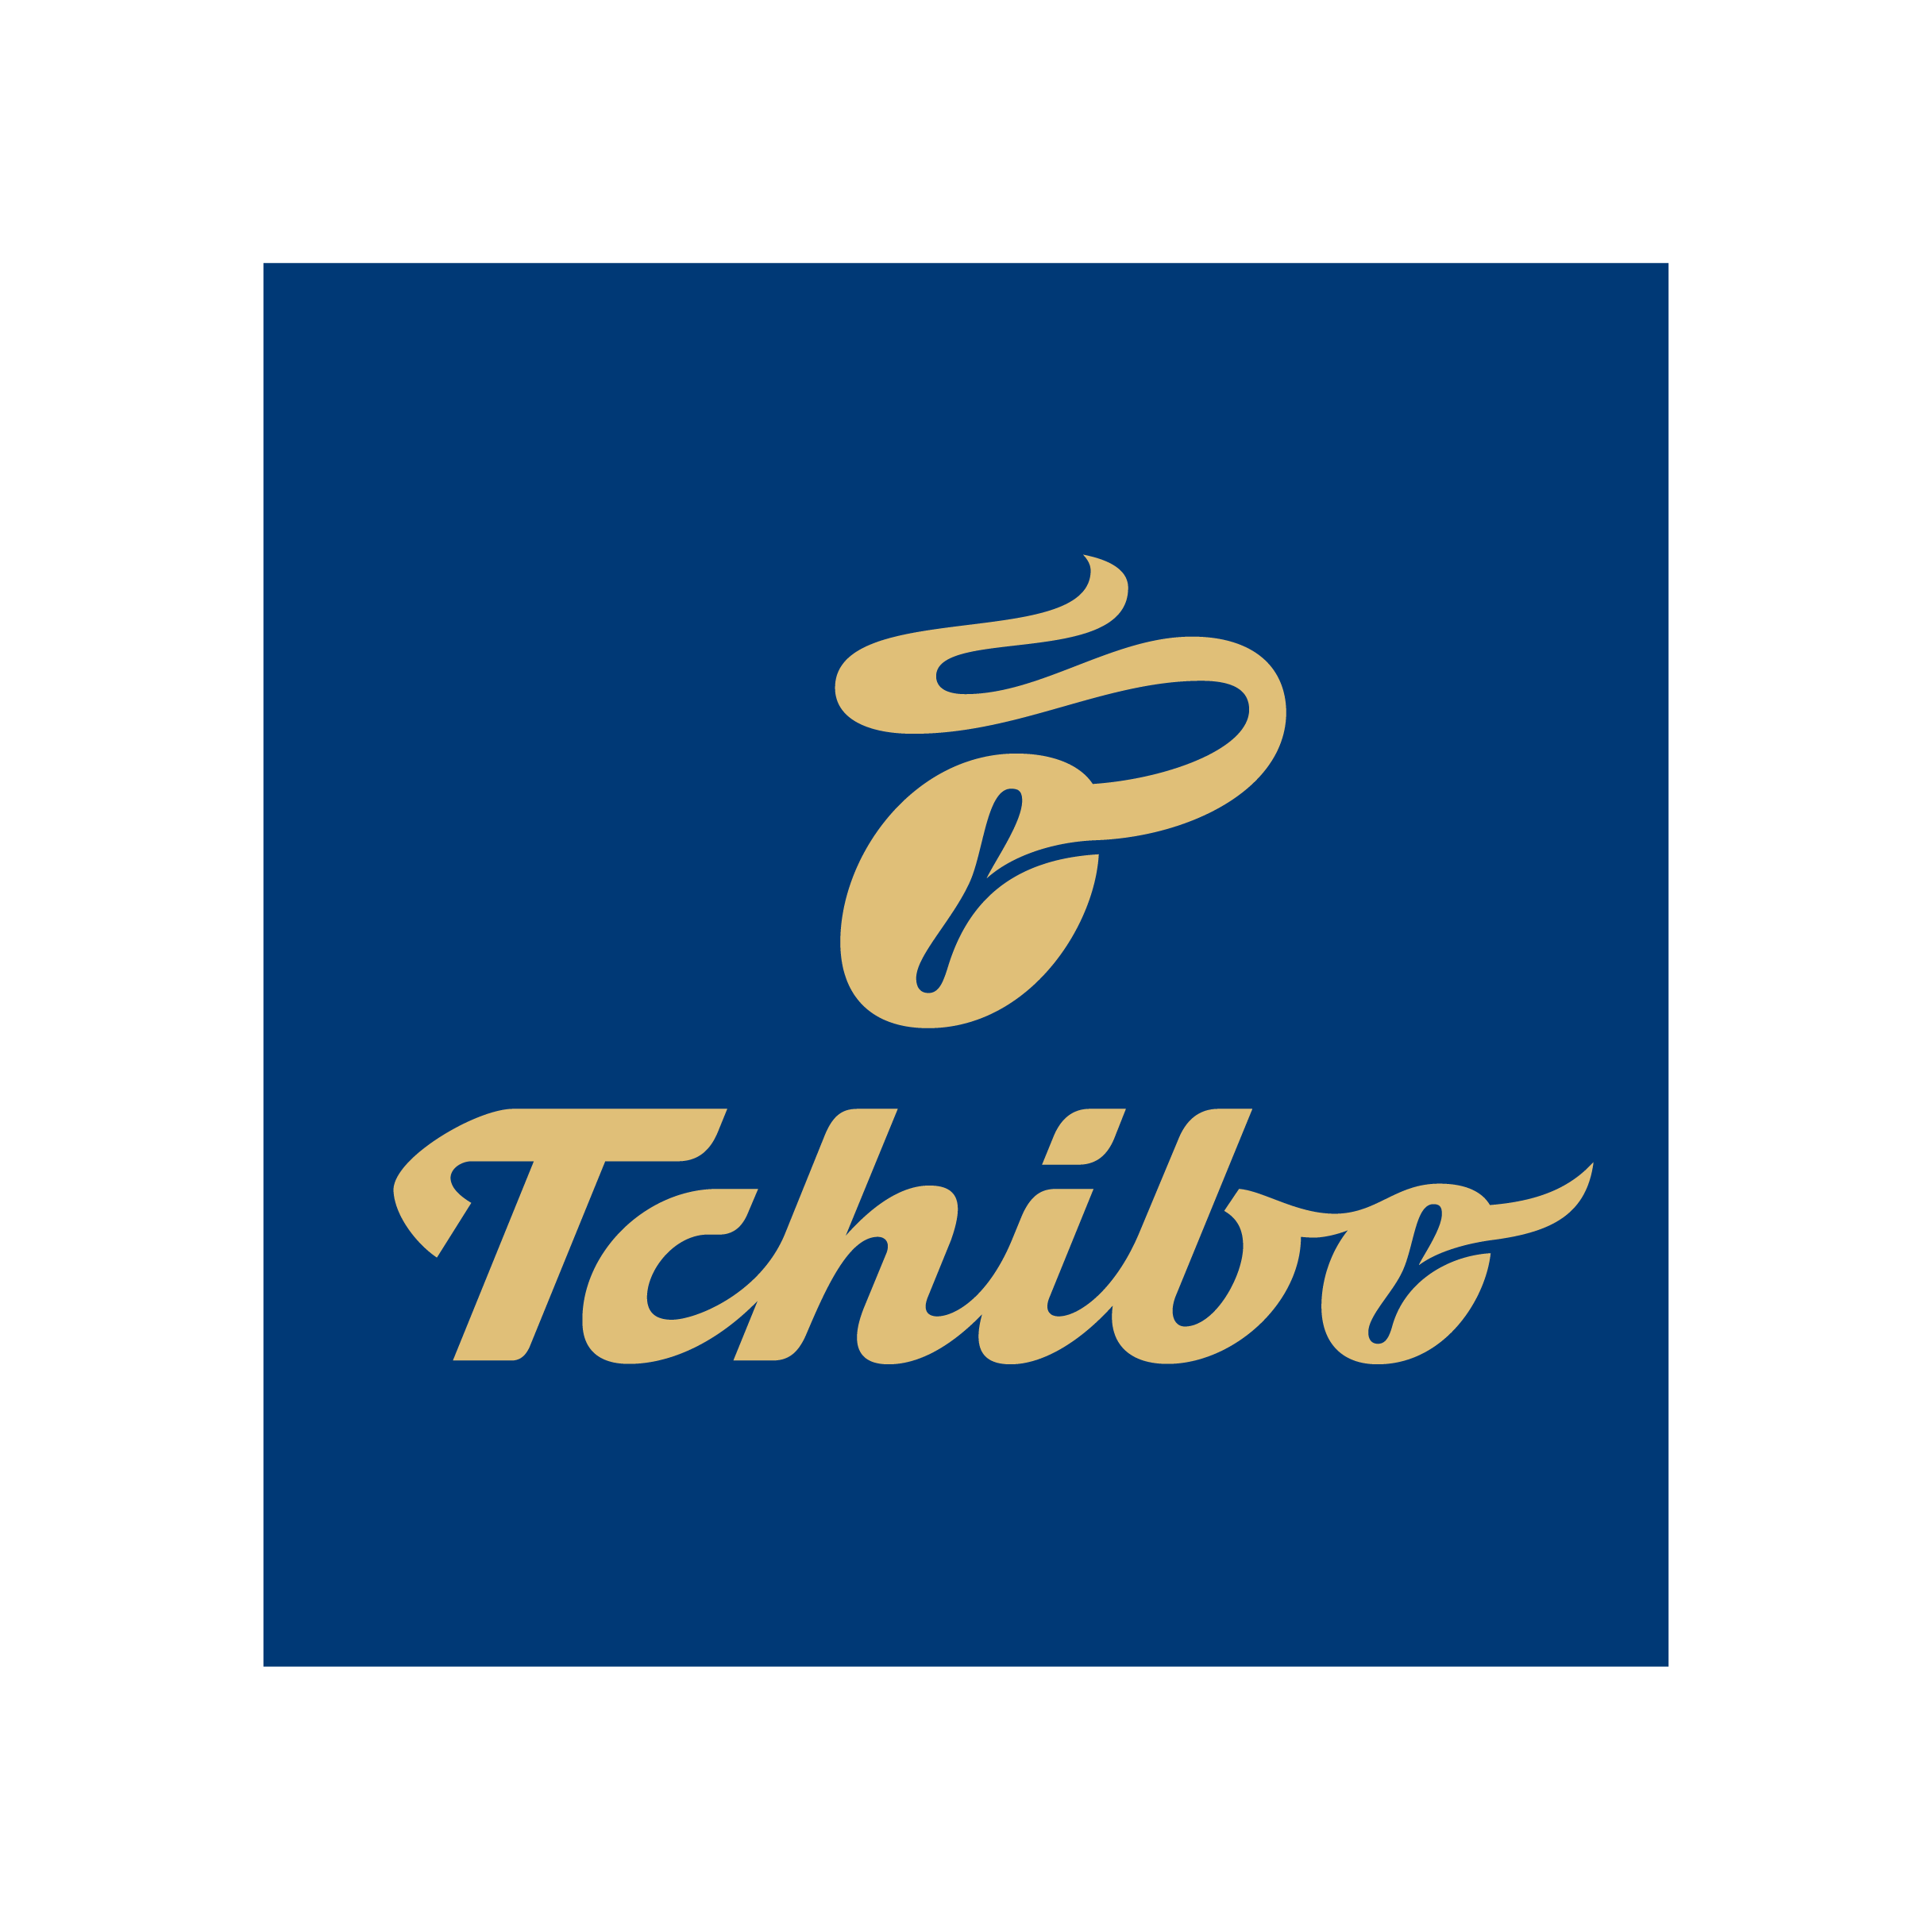 TchiboLogo300dpi150mmRGB.png